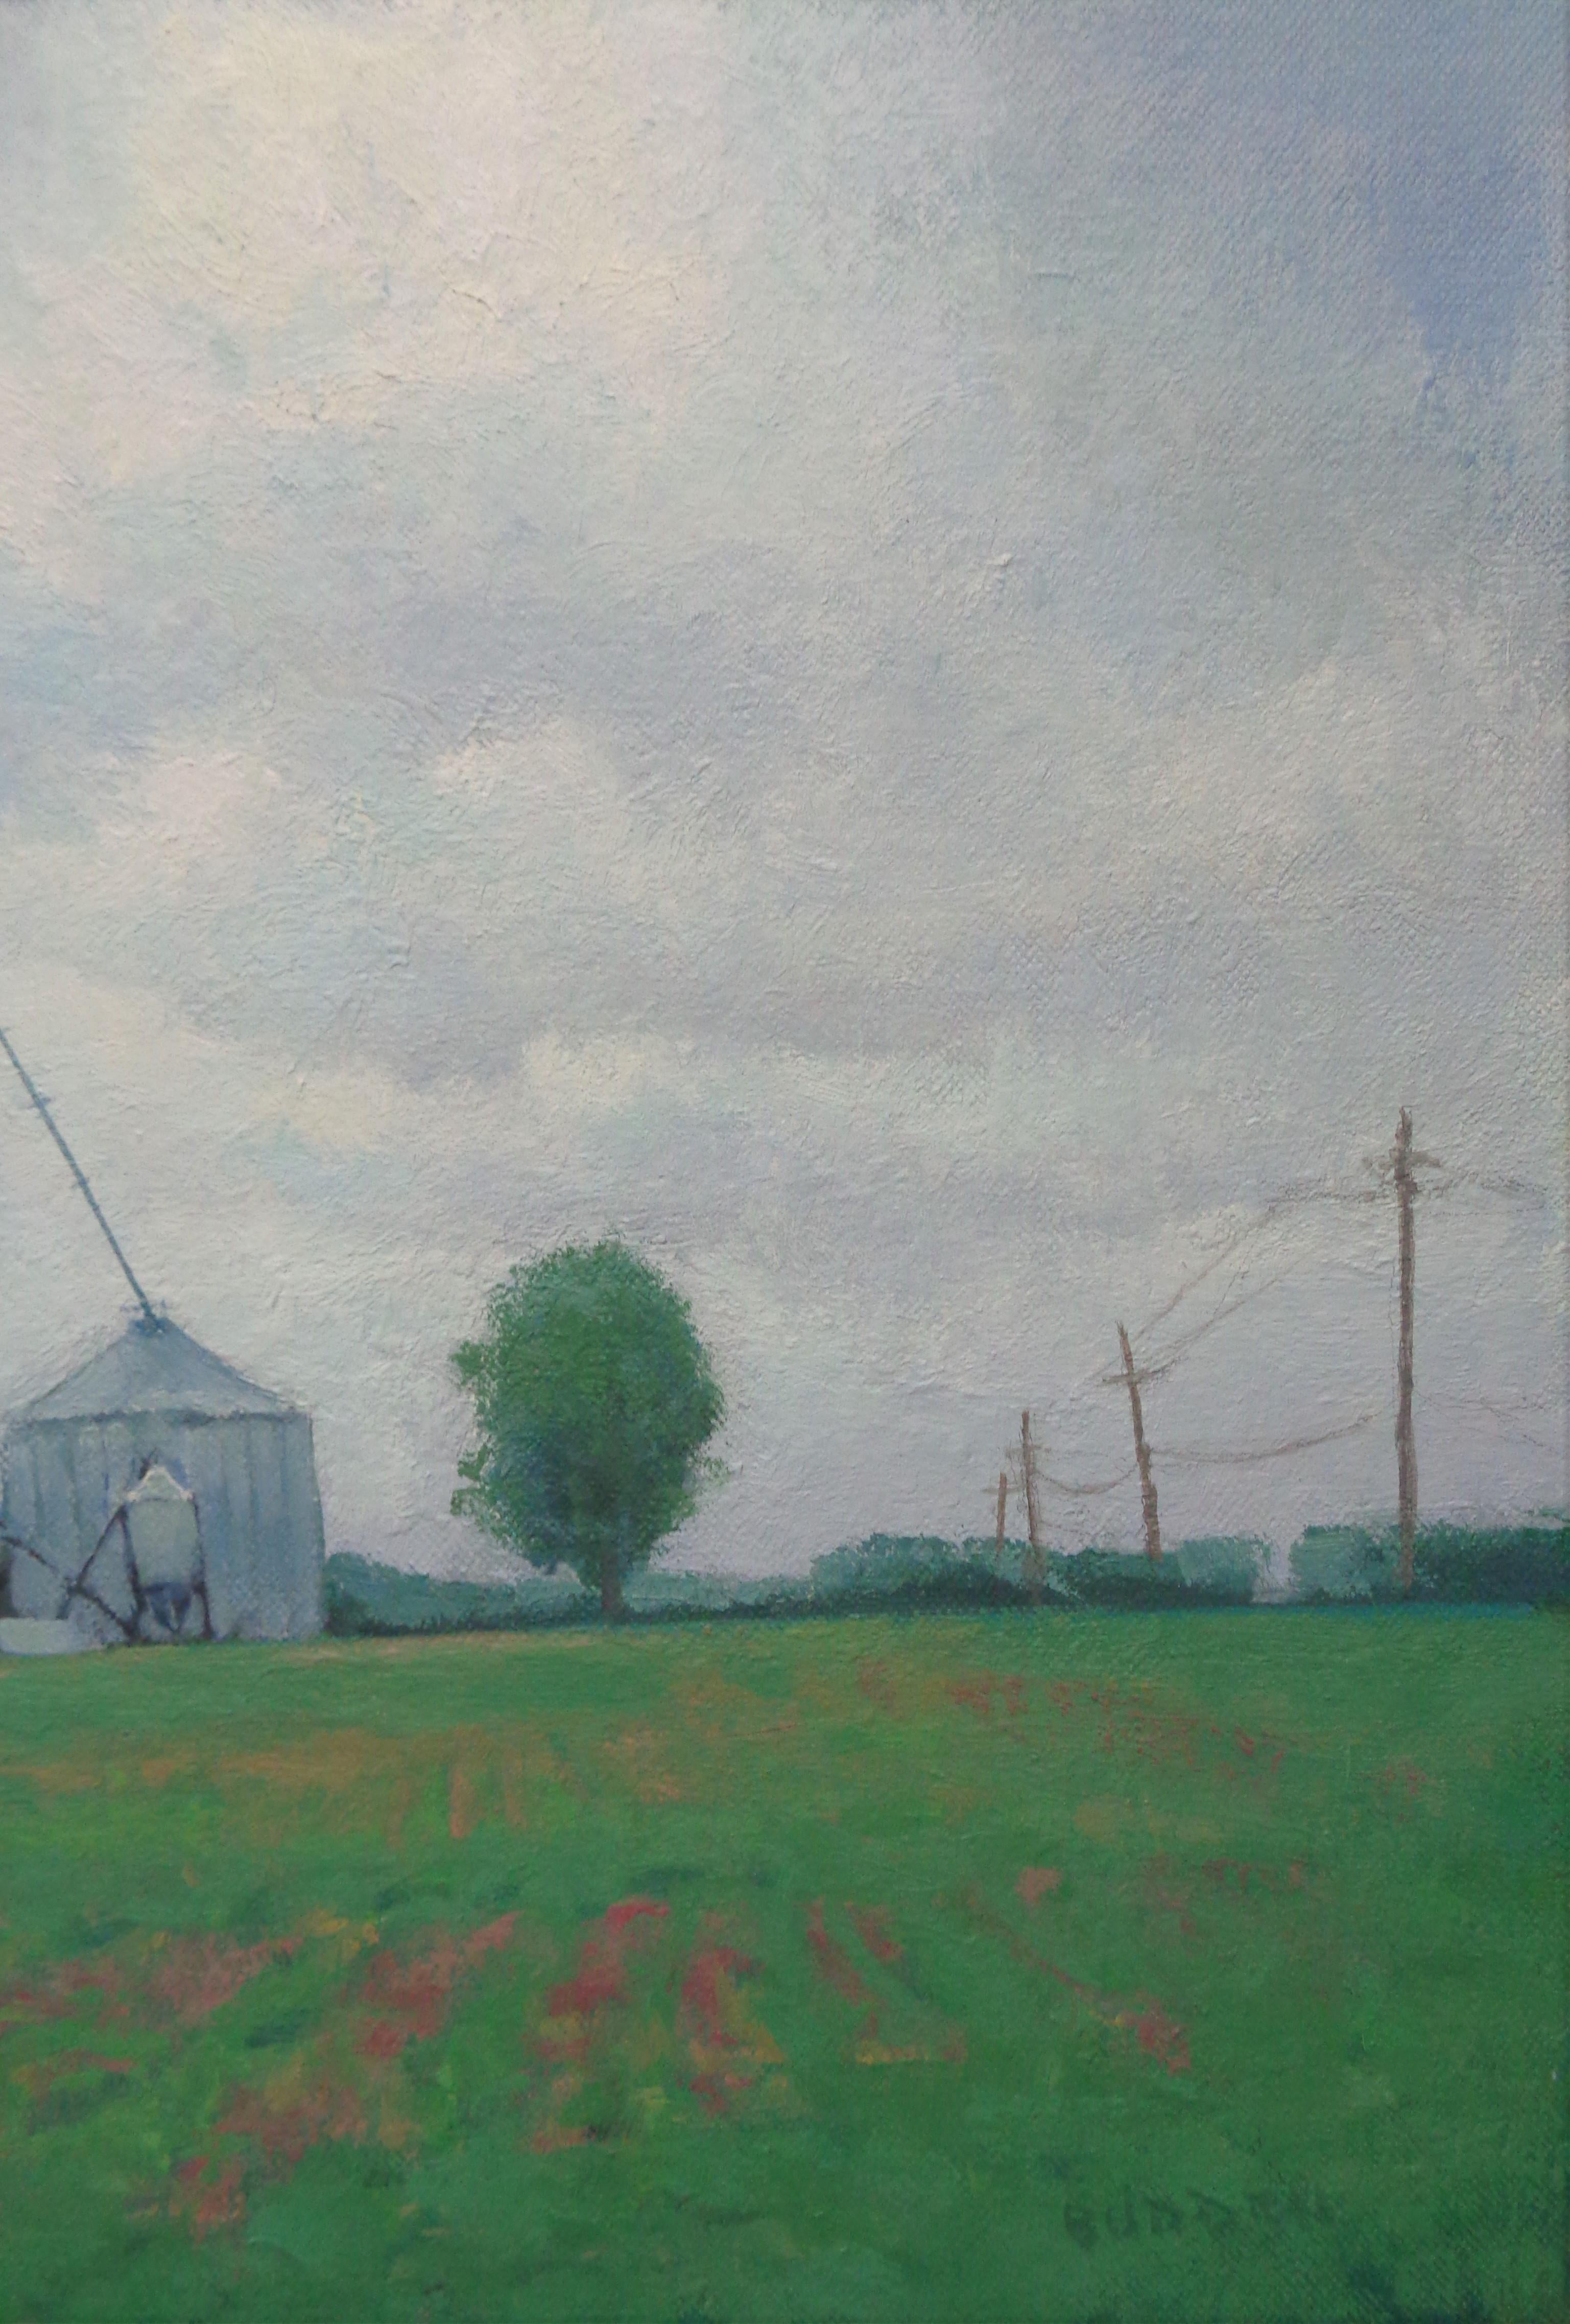  Impressionistic Rural Farm Award Winner Landscape Oil Painting Michael Budden  For Sale 4